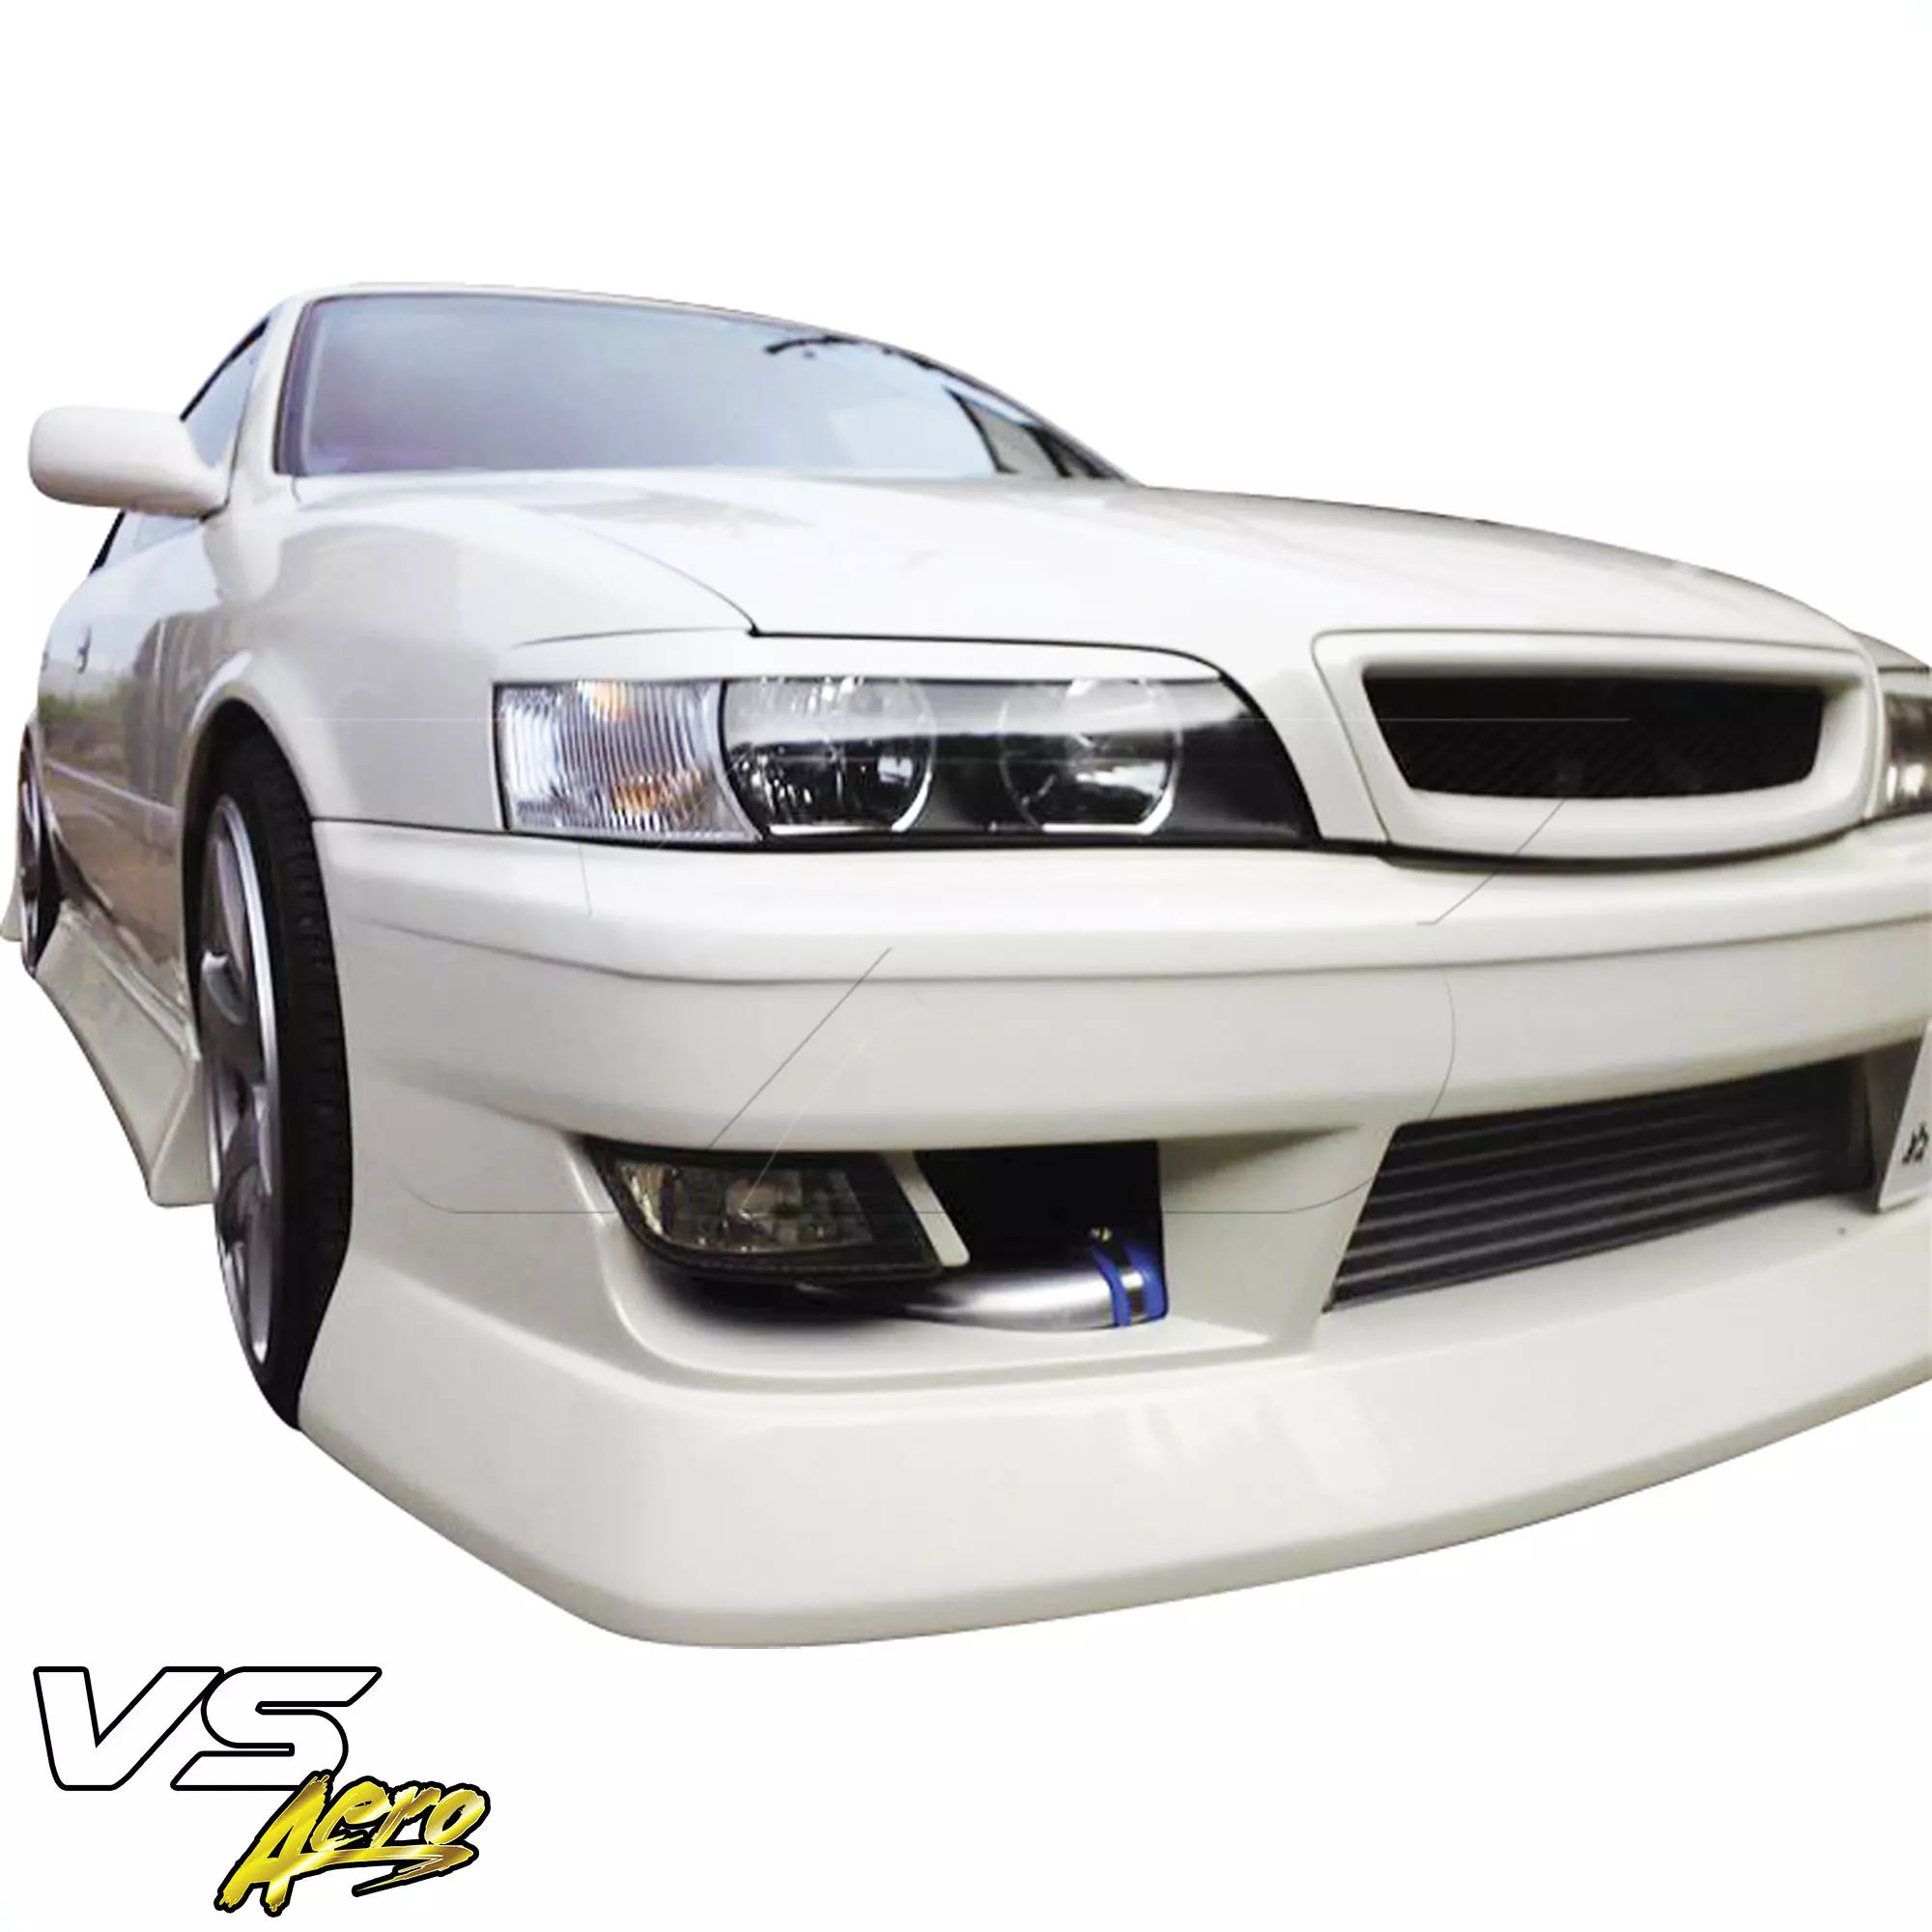 VSaero FRP BSPO Body Kit 4pc > Toyota Chaser JZX100 1996-2000 - Image 6